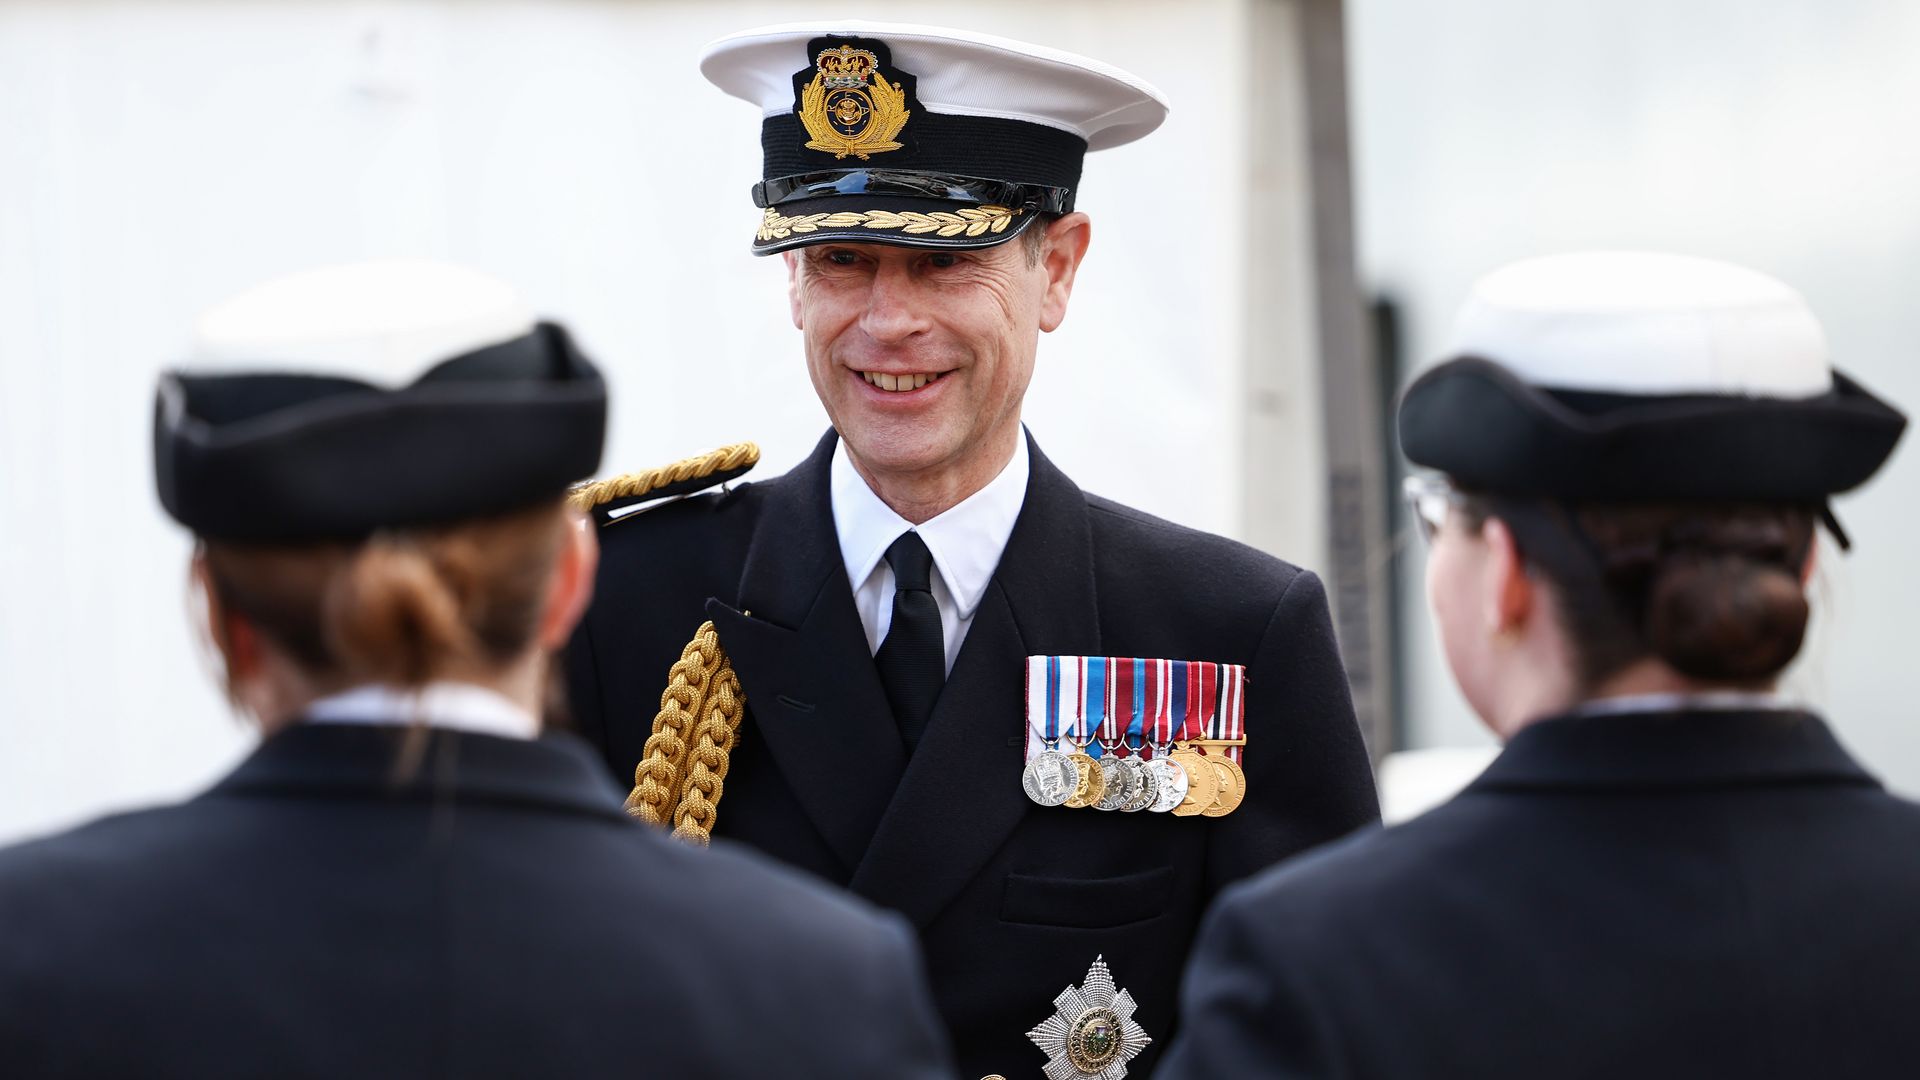 Prince Edward wearing military uniform